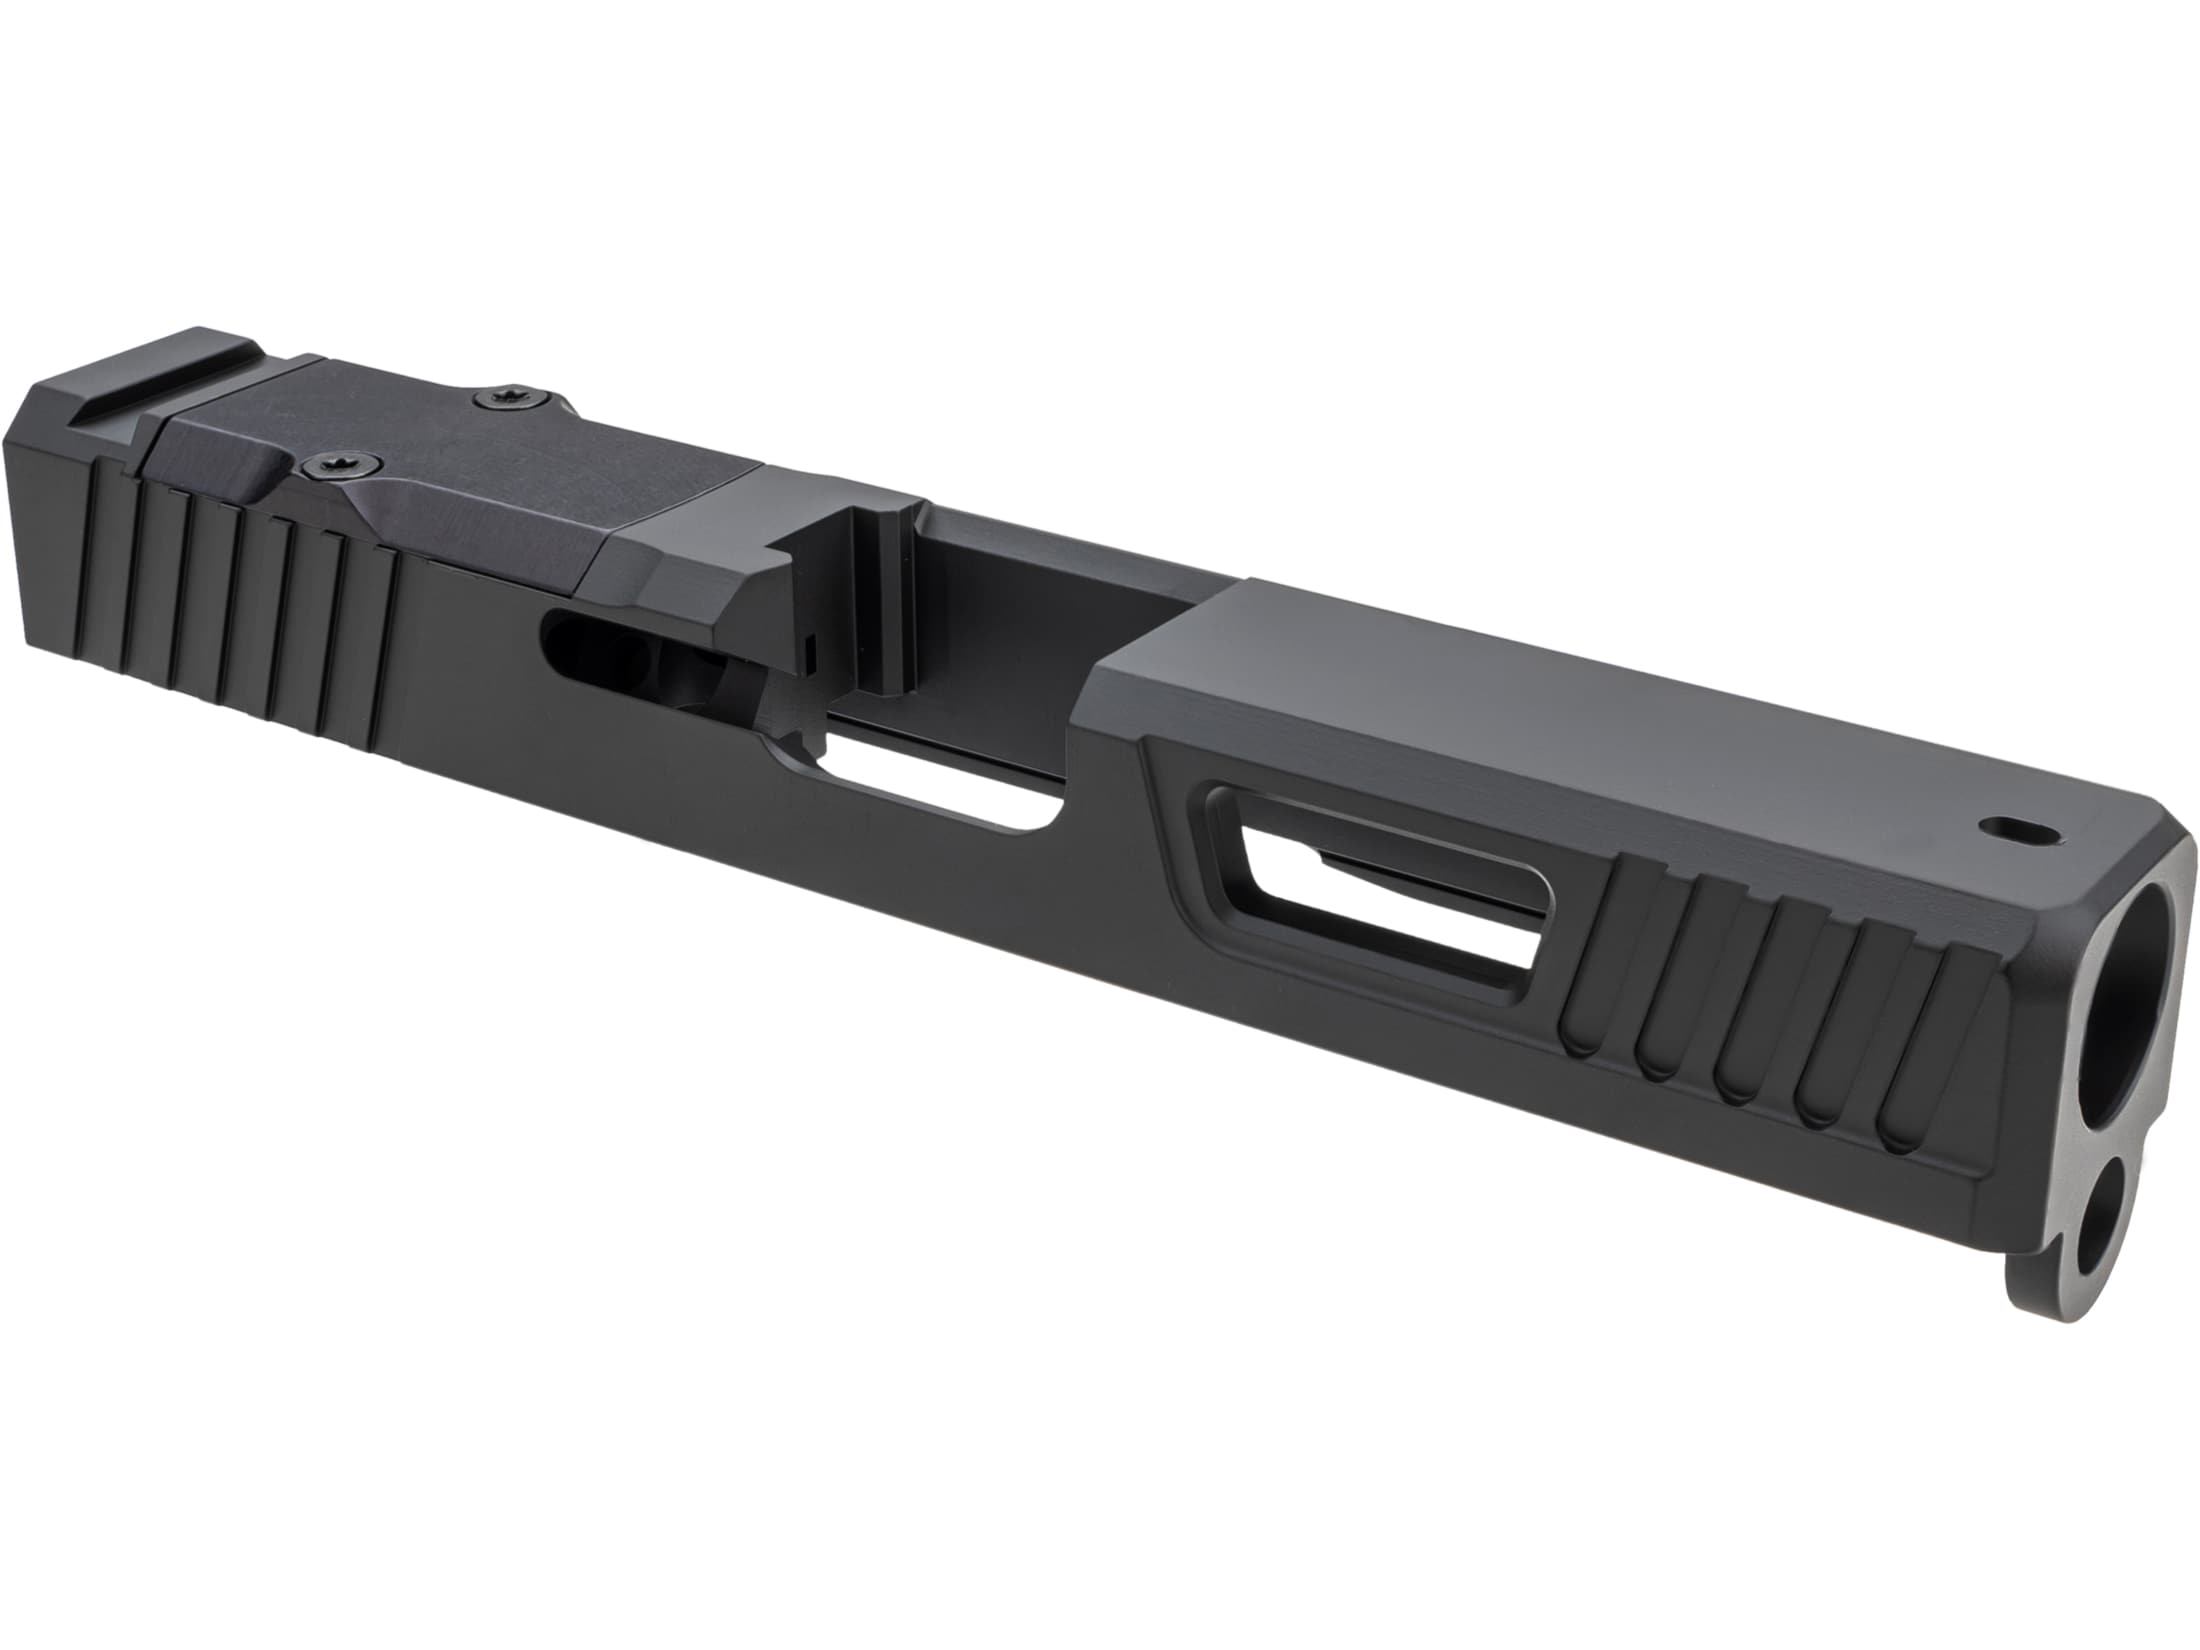 Swenson Enhanced Slide Rmr Cut Glock 19 Gen 3 9mm Luger Ss Flat Dark